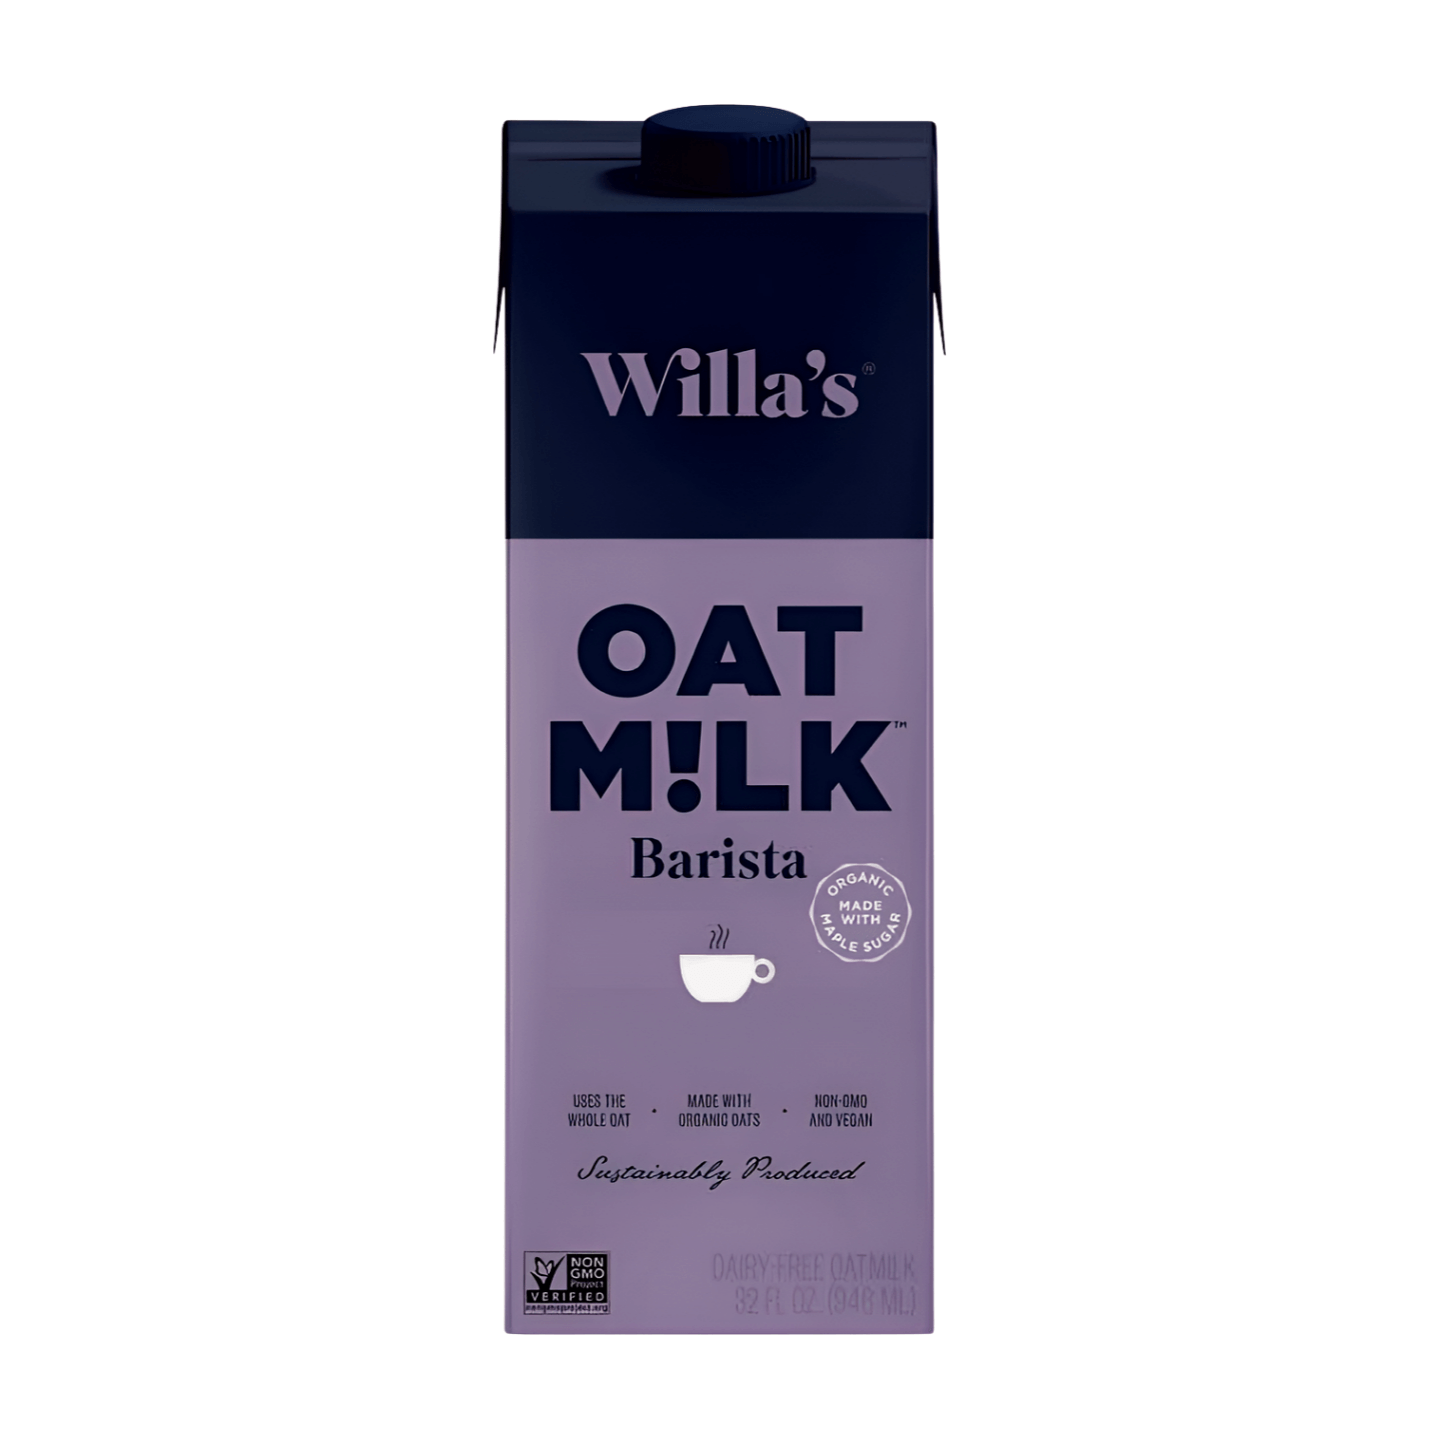 Willa's Barista Oat Milk